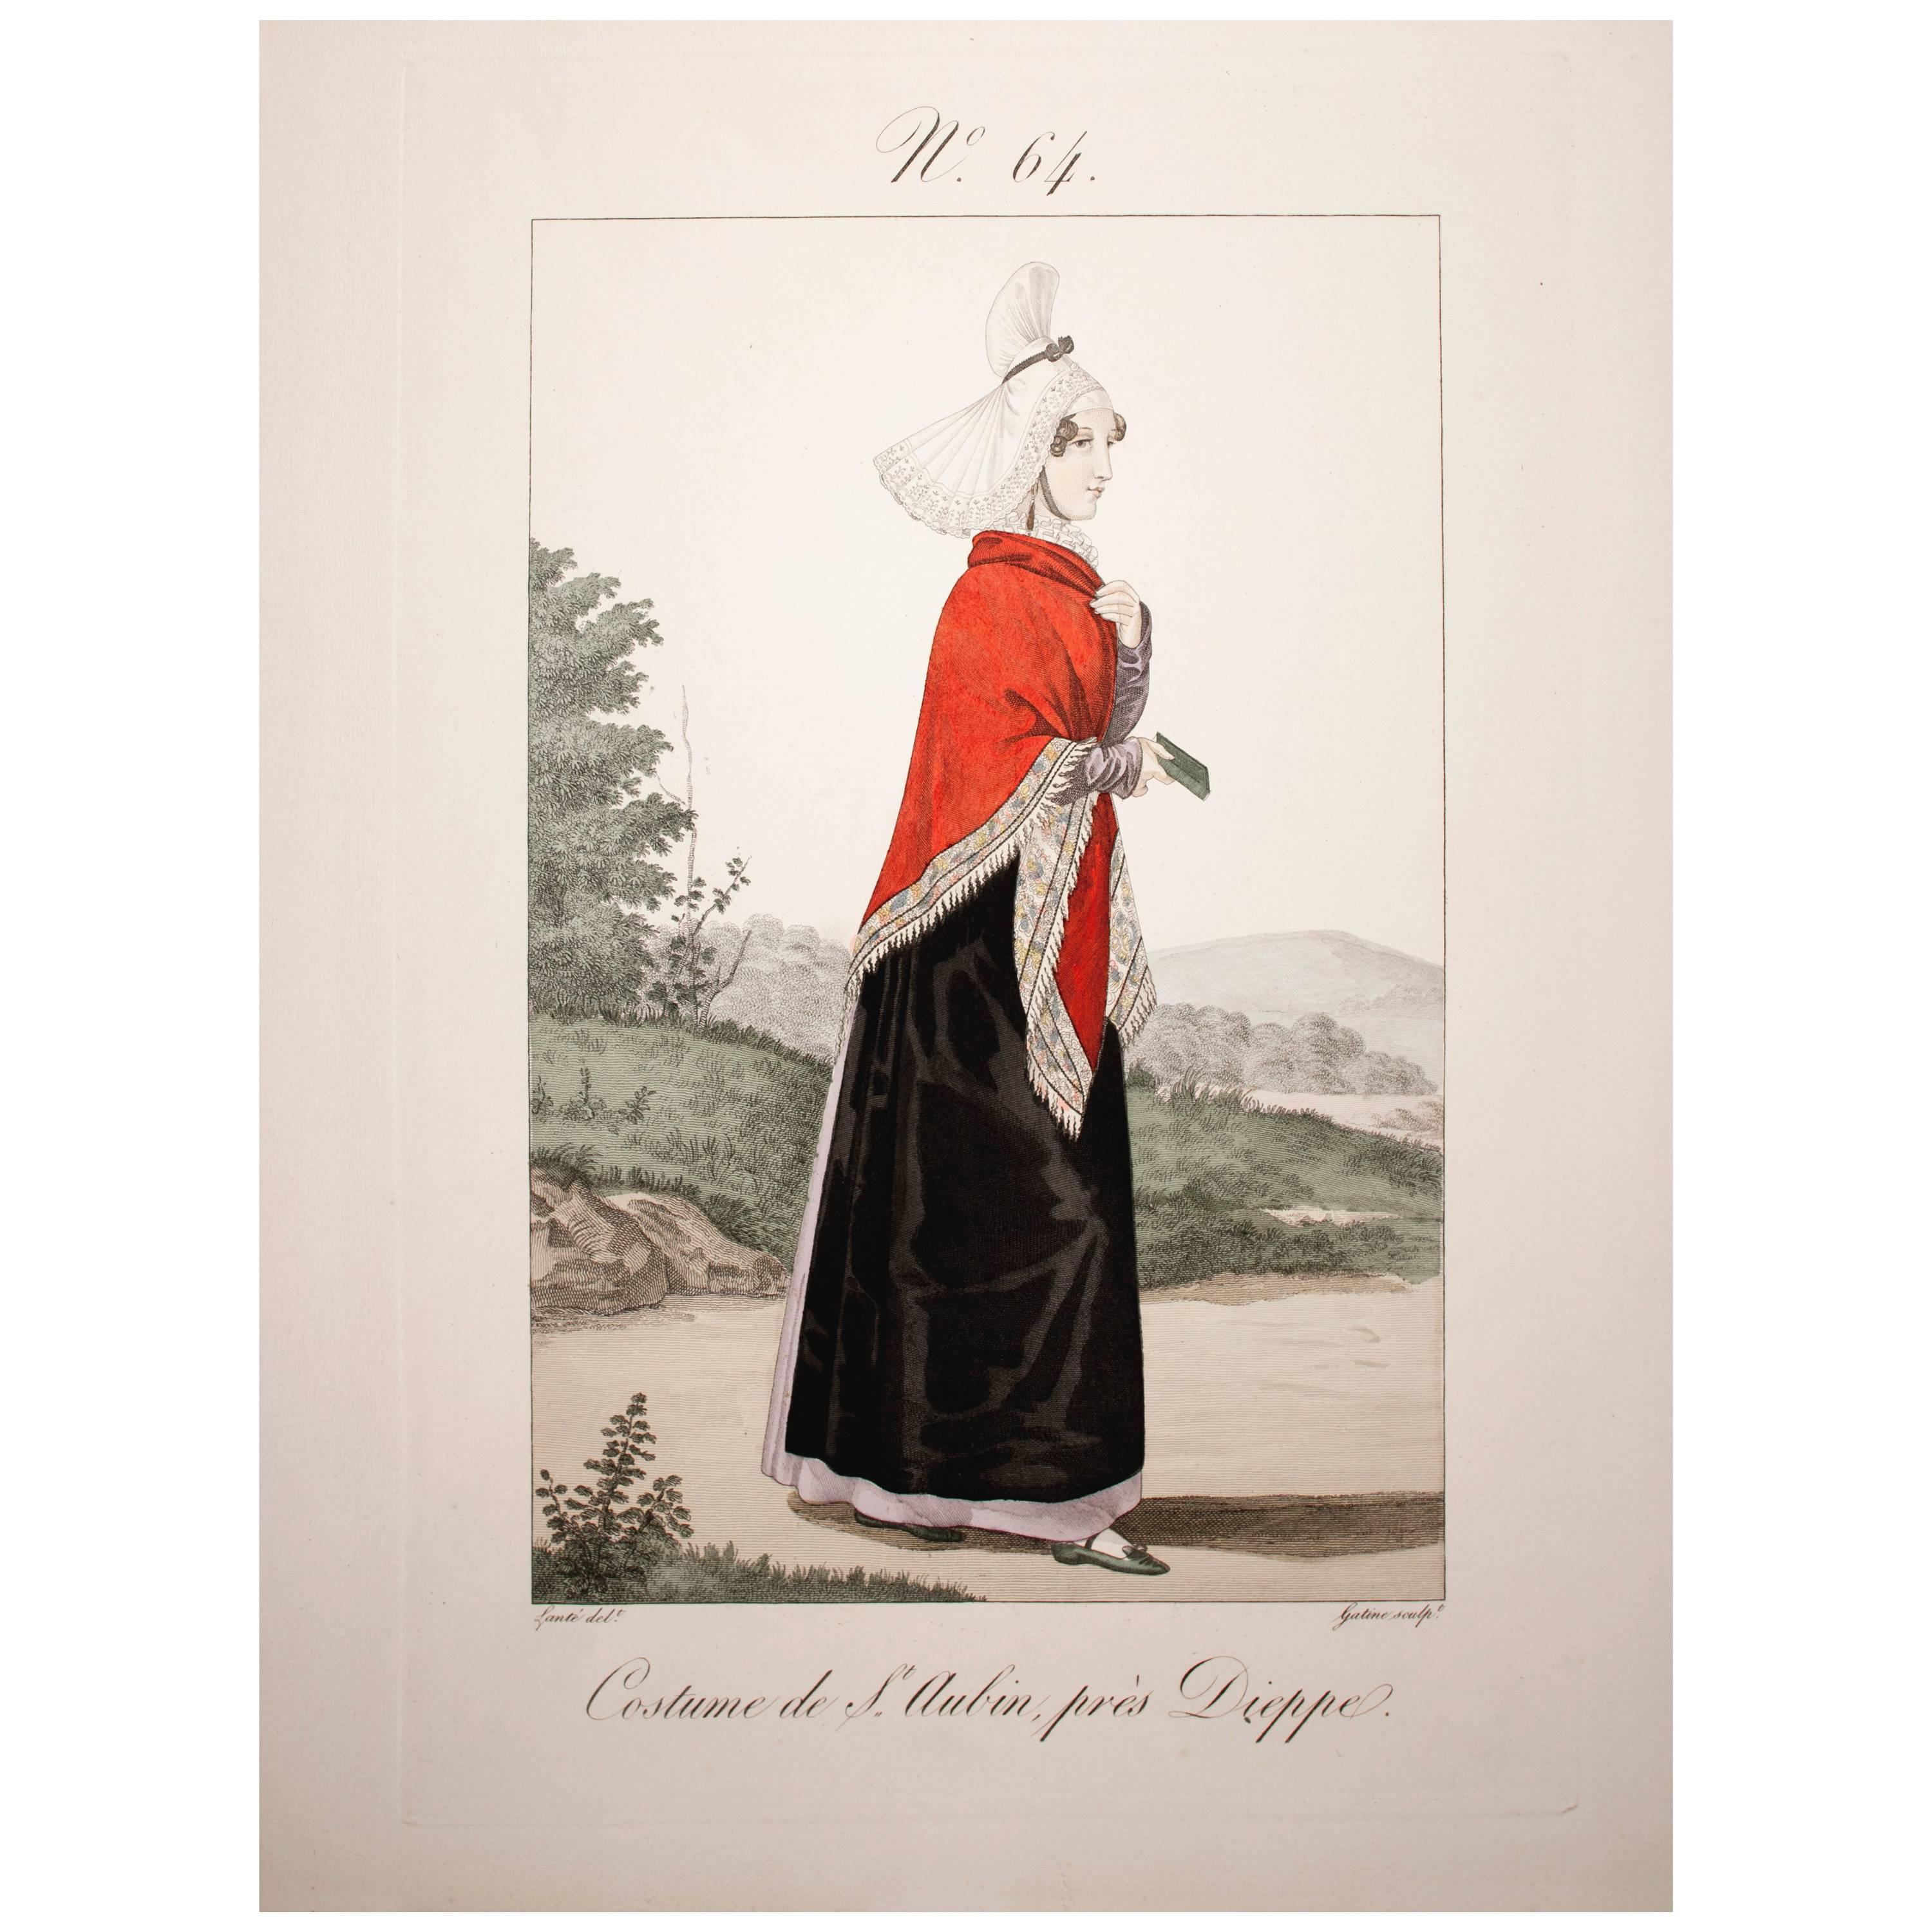 Engraving #64 Costume De St. Aubin, Pres Dieppe